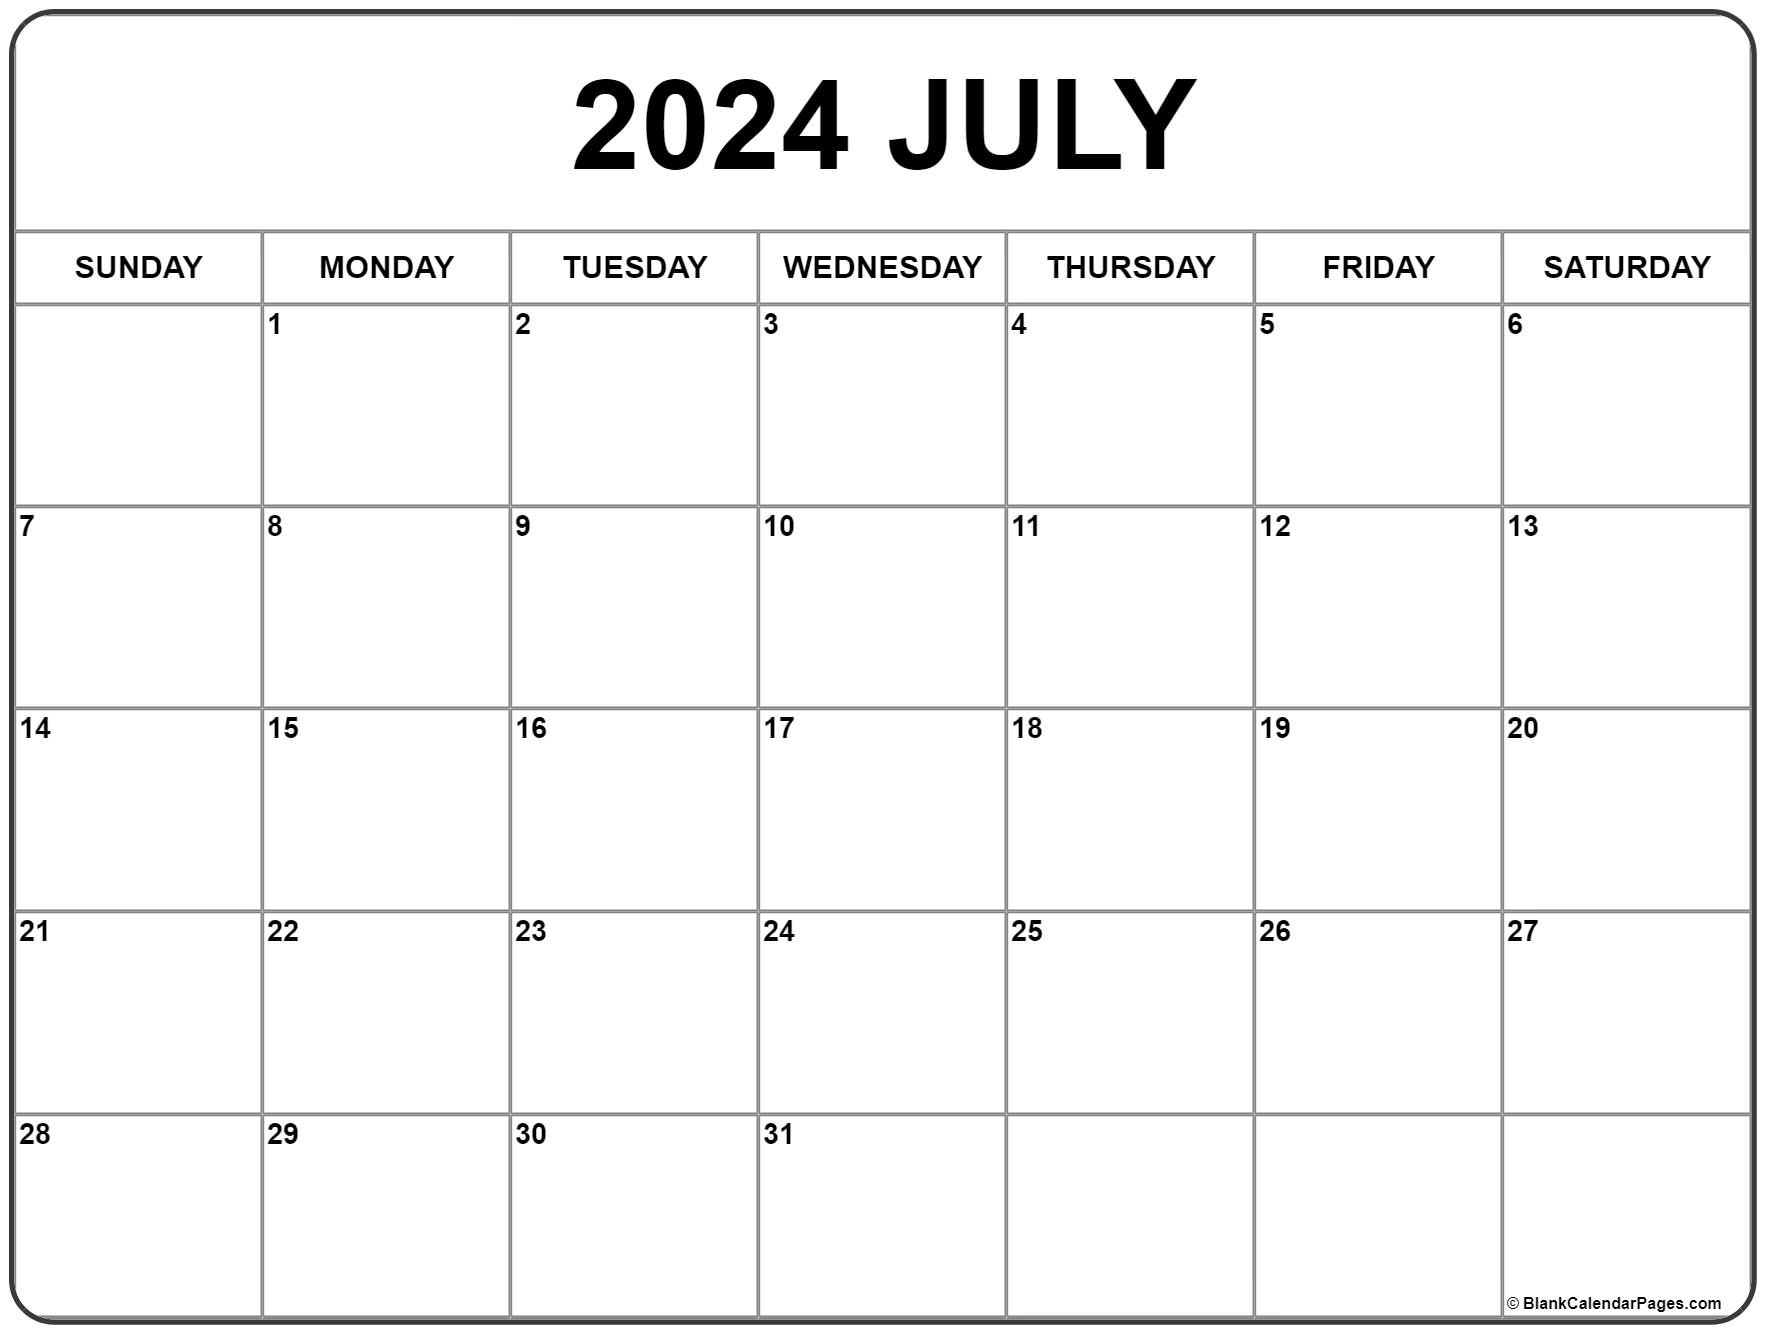 July 2024 Calendar | Free Printable Calendar with regard to 7th July 2024 Calendar Printable